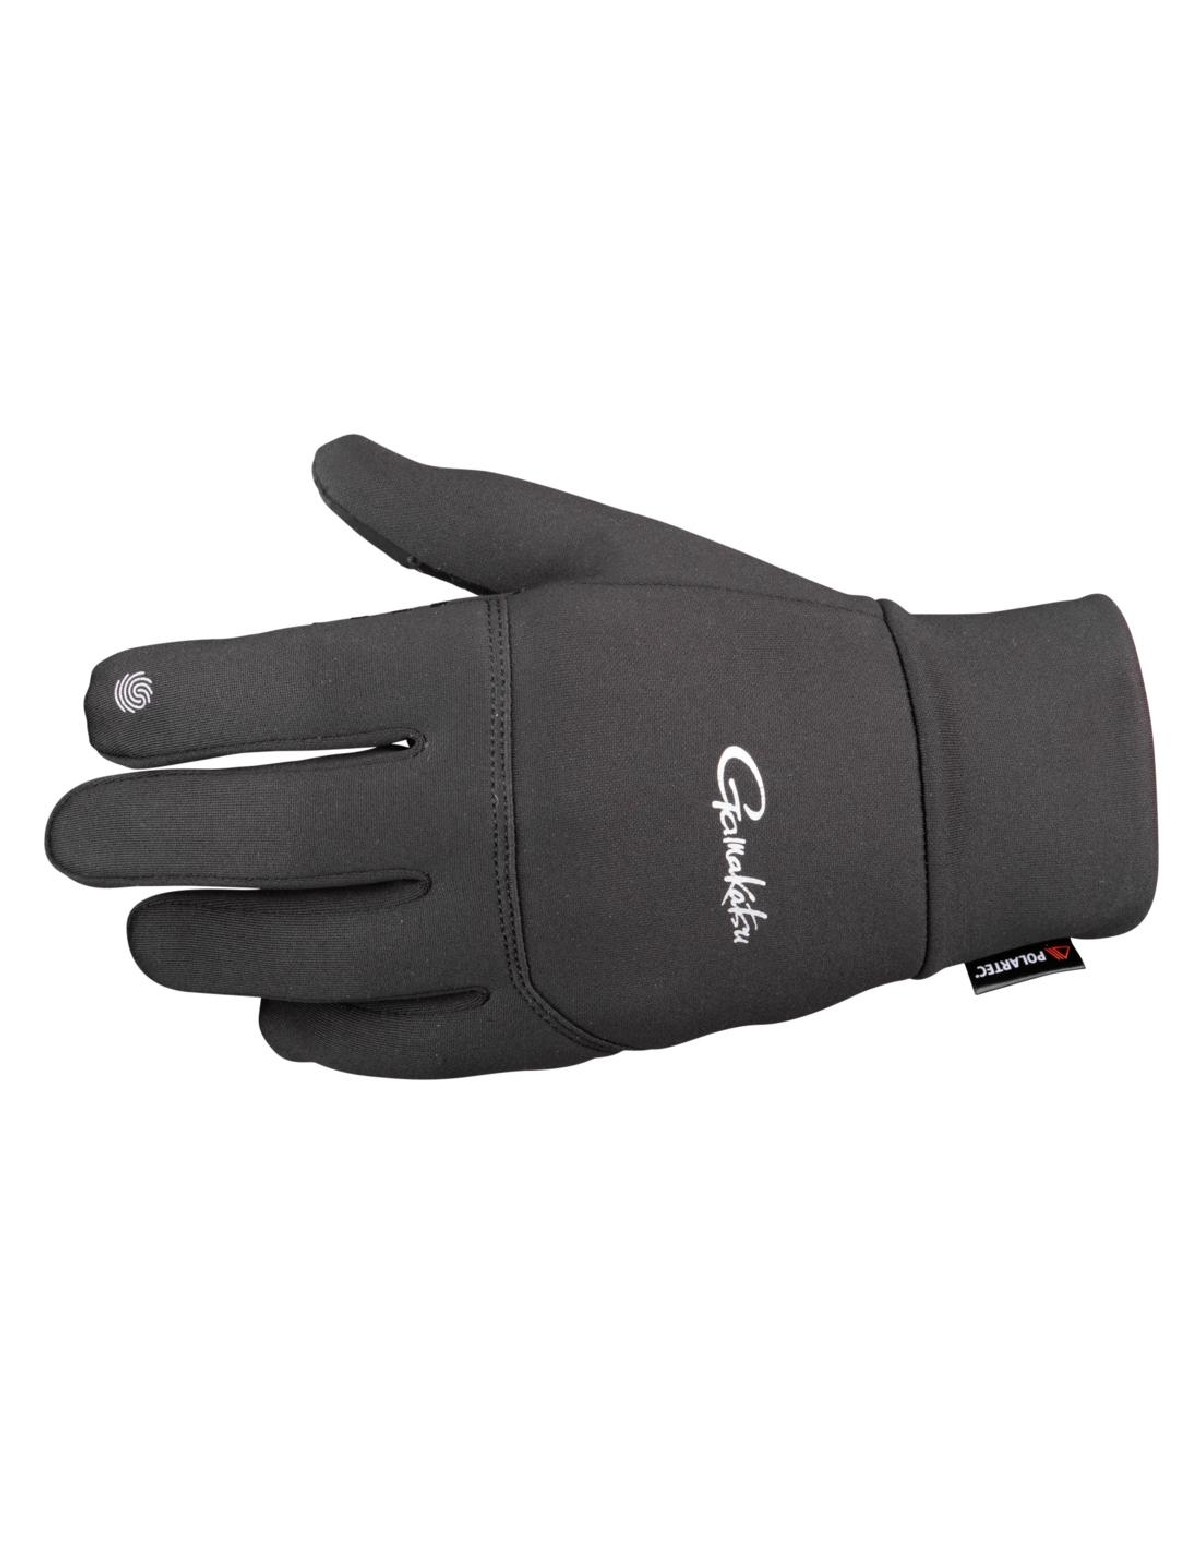 Gamakatsu G-Power Gloves Large